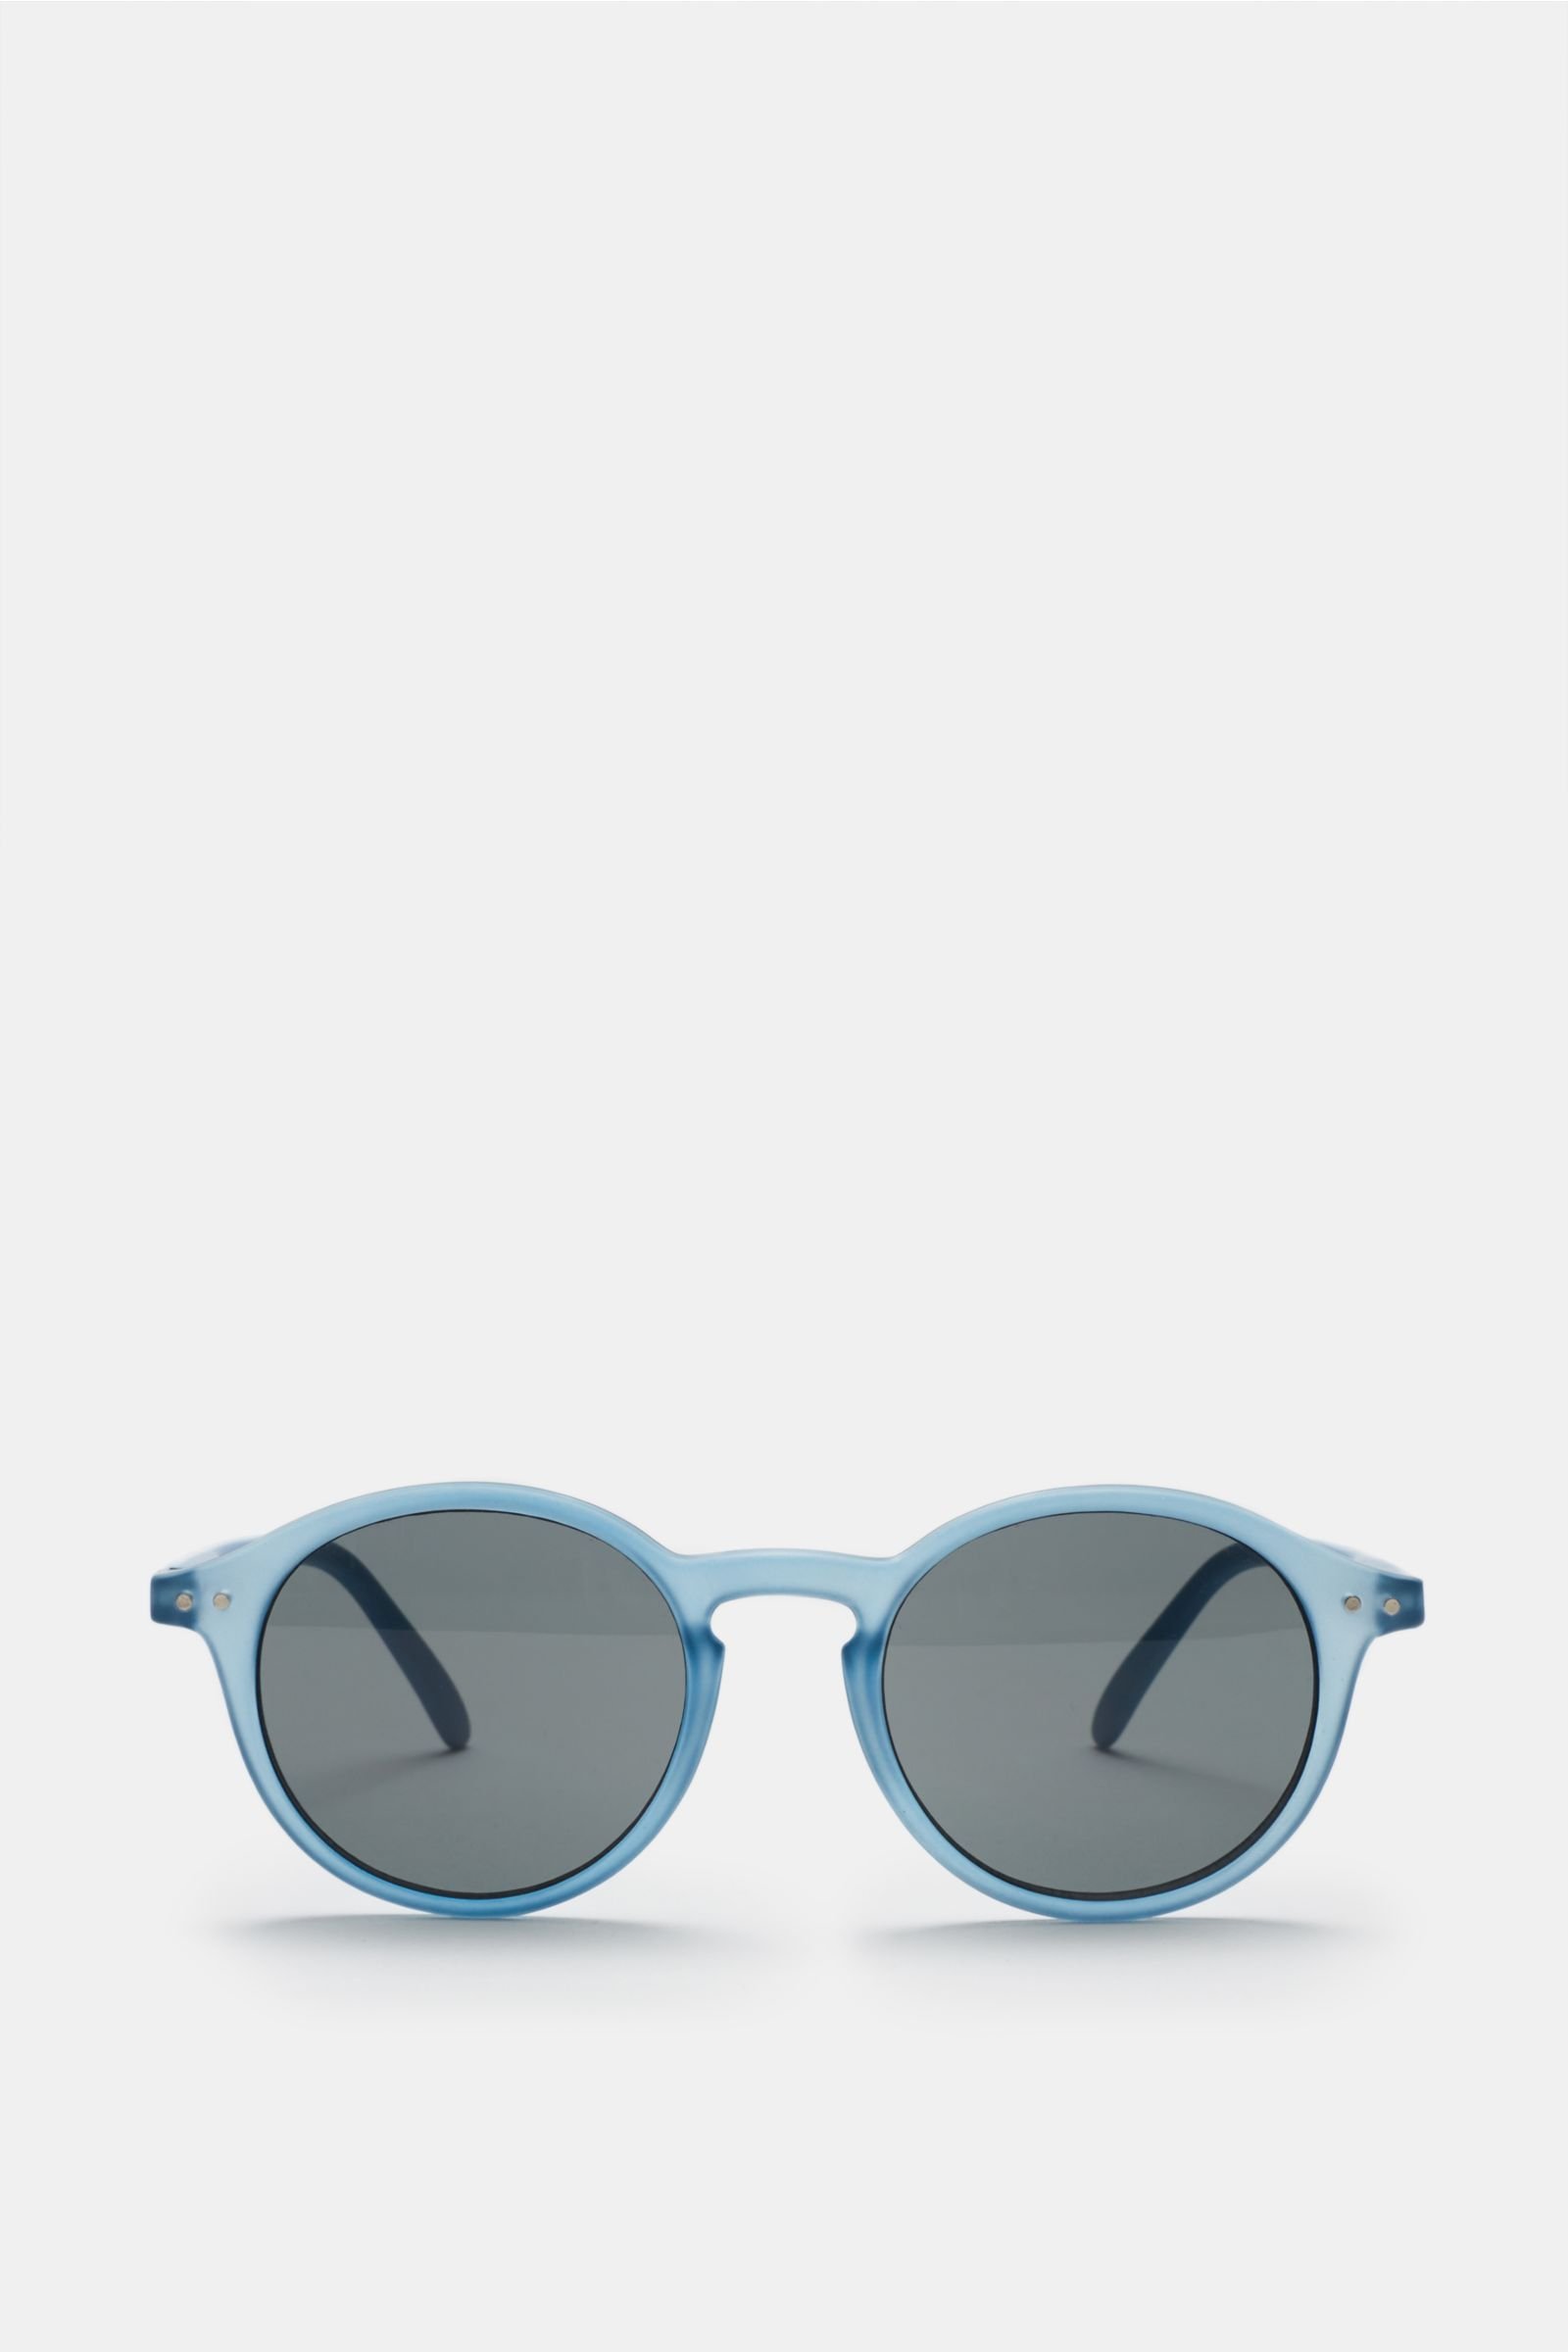 Sunglasses '#D Sun' smoky blue/grey